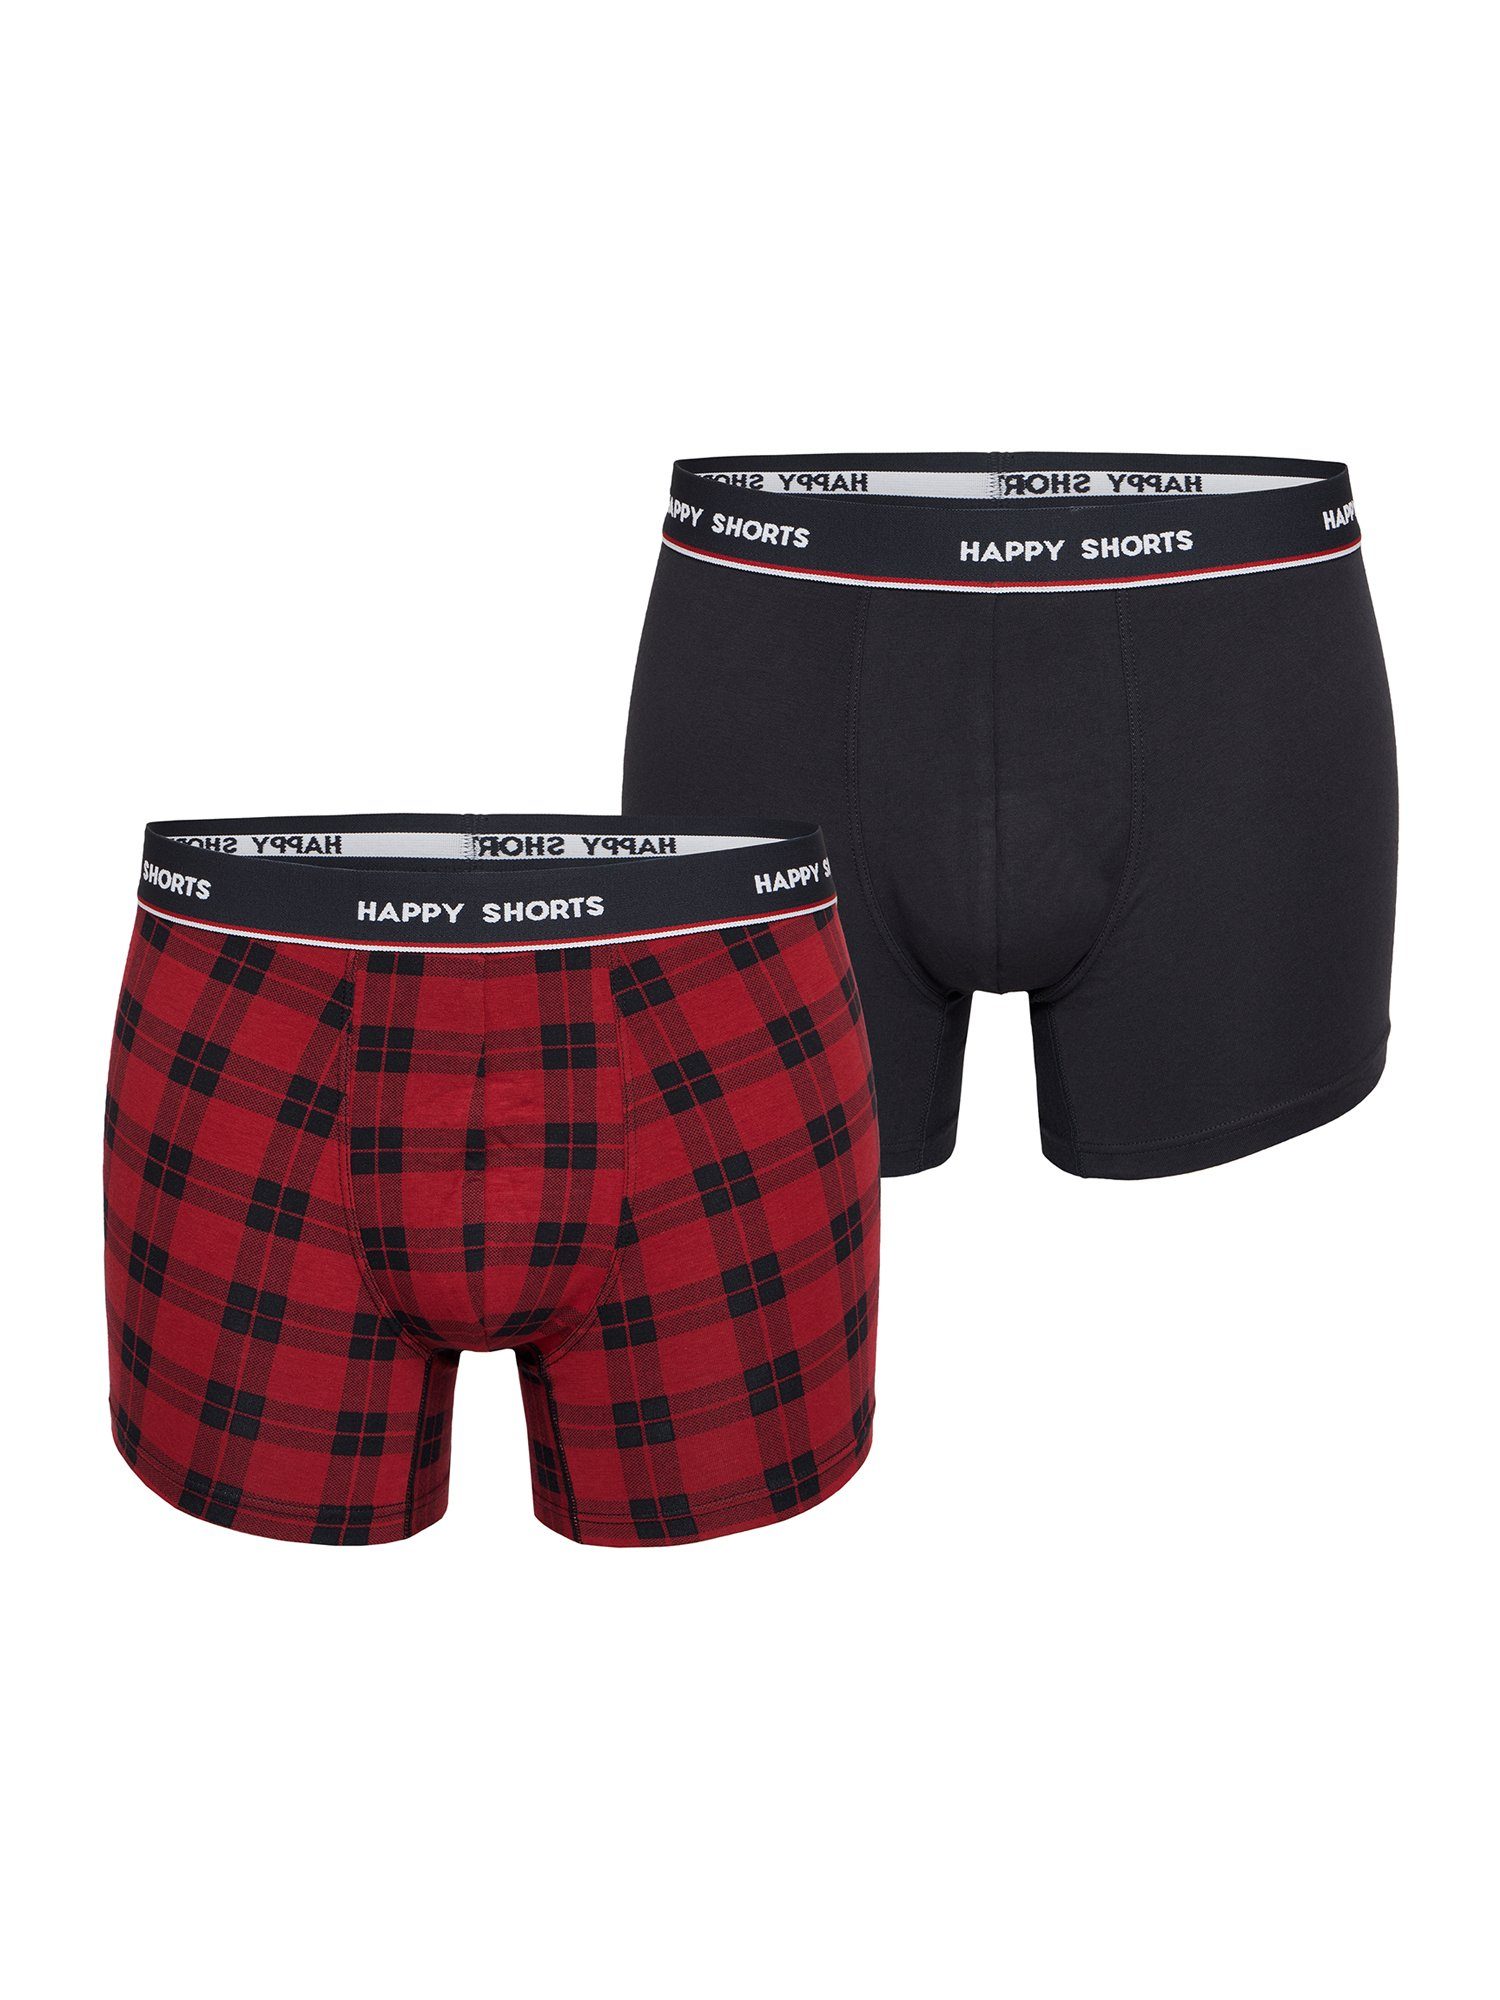 Phil & Co. Retro Pants All Styles (2-St) Боксерські чоловічі труси, боксерки Trunks Herren bequem und stylisch